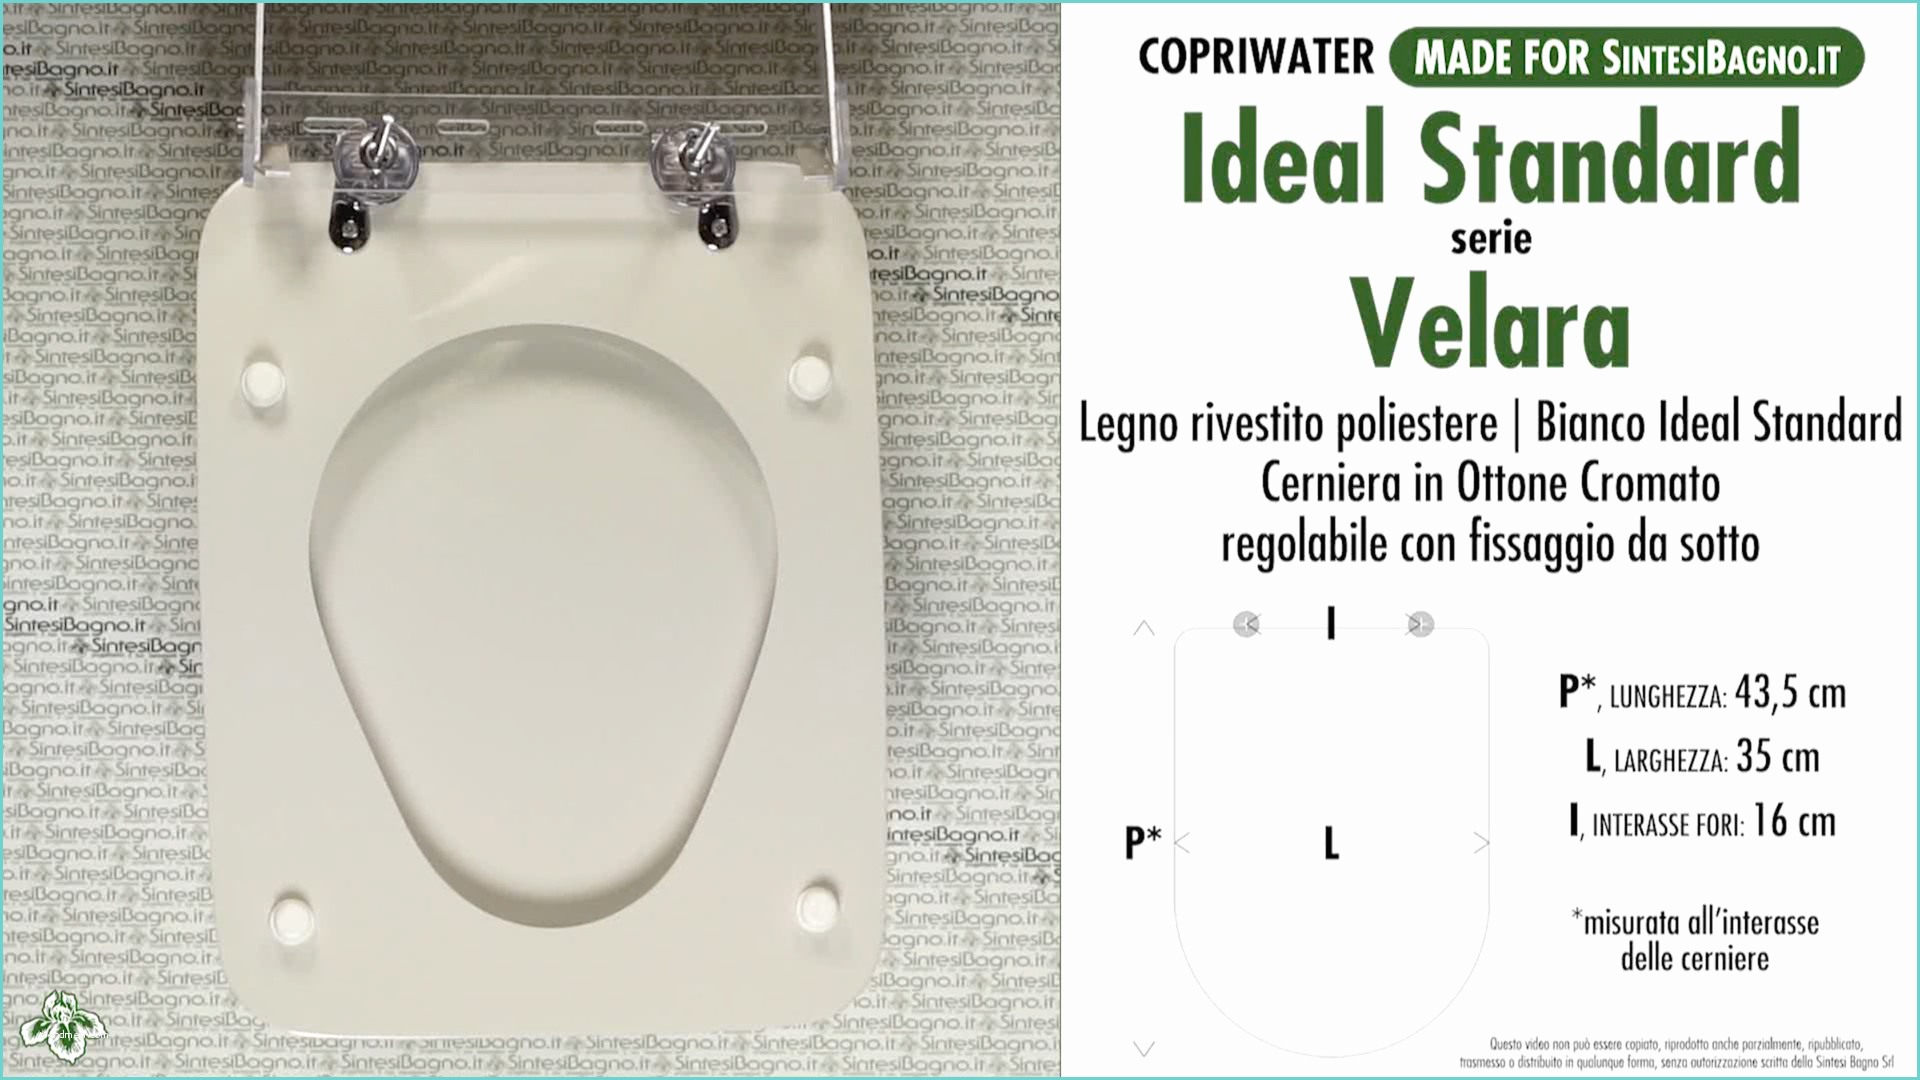 Copriwater Ideal Standard Leroy Merlin Copriwater Ideal Standard Serie Velara Rivanazzano